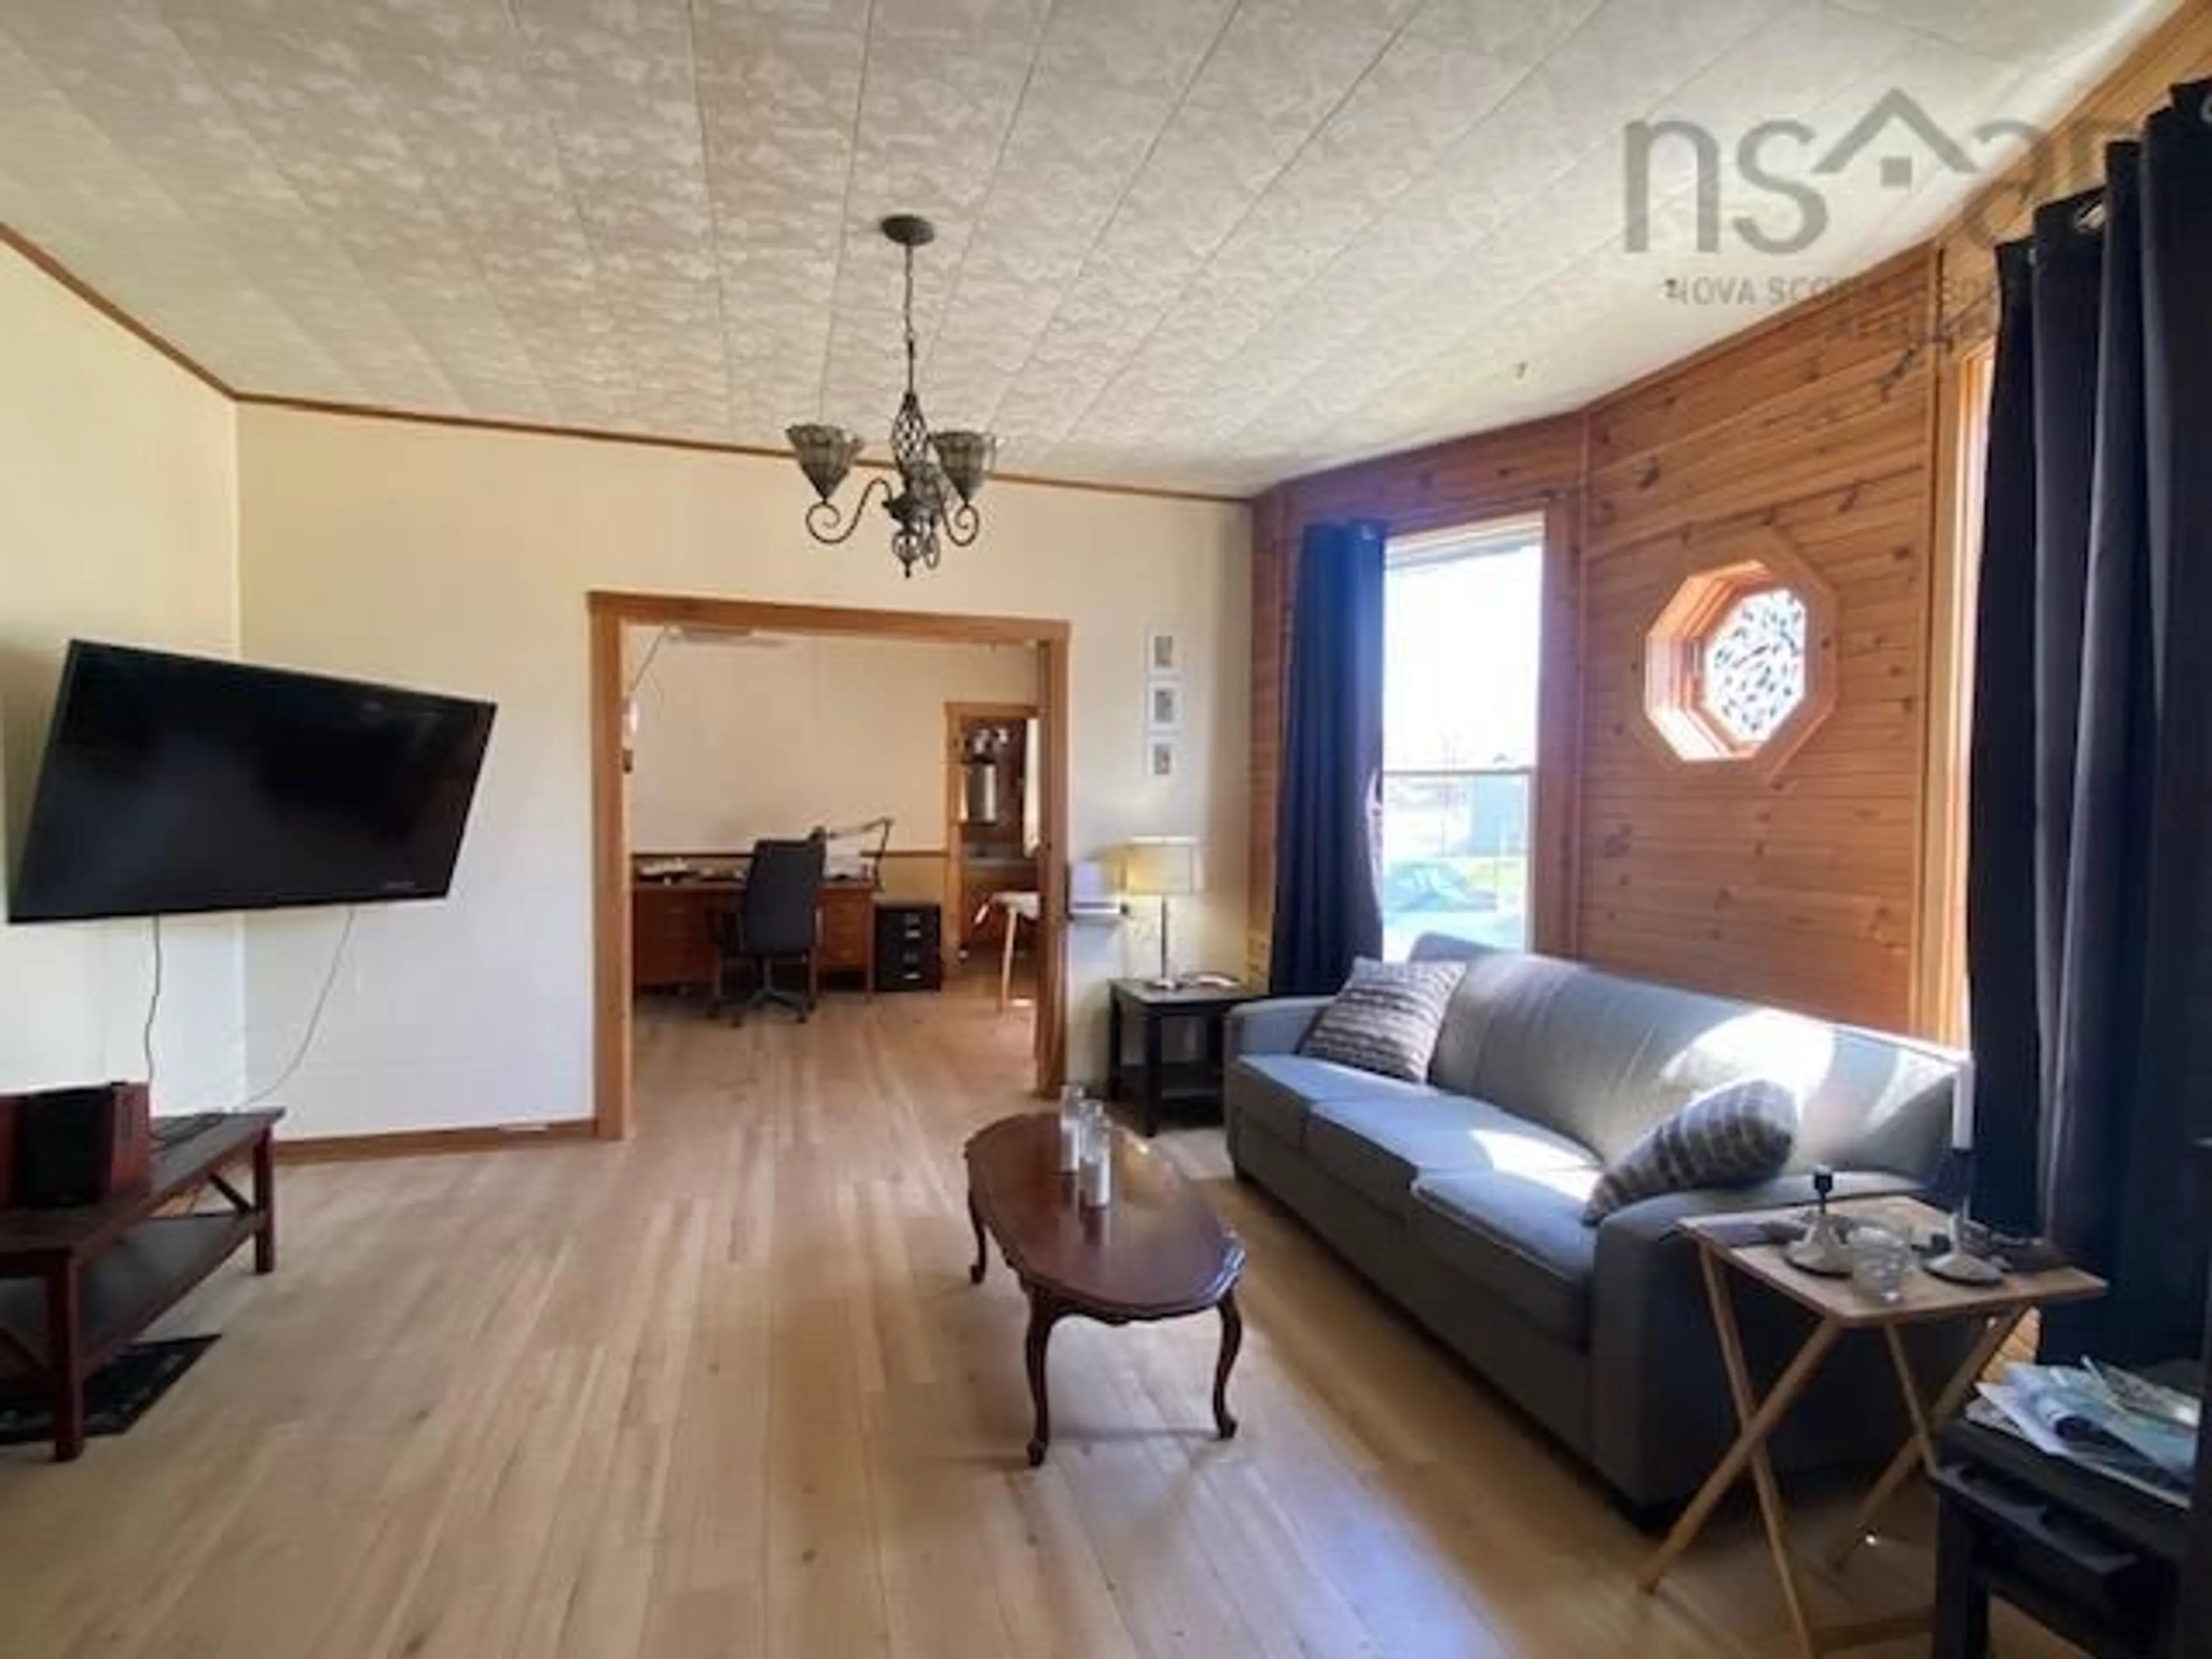 Living room for 142 Mowatt St, Shelburne Nova Scotia B0T 1W0